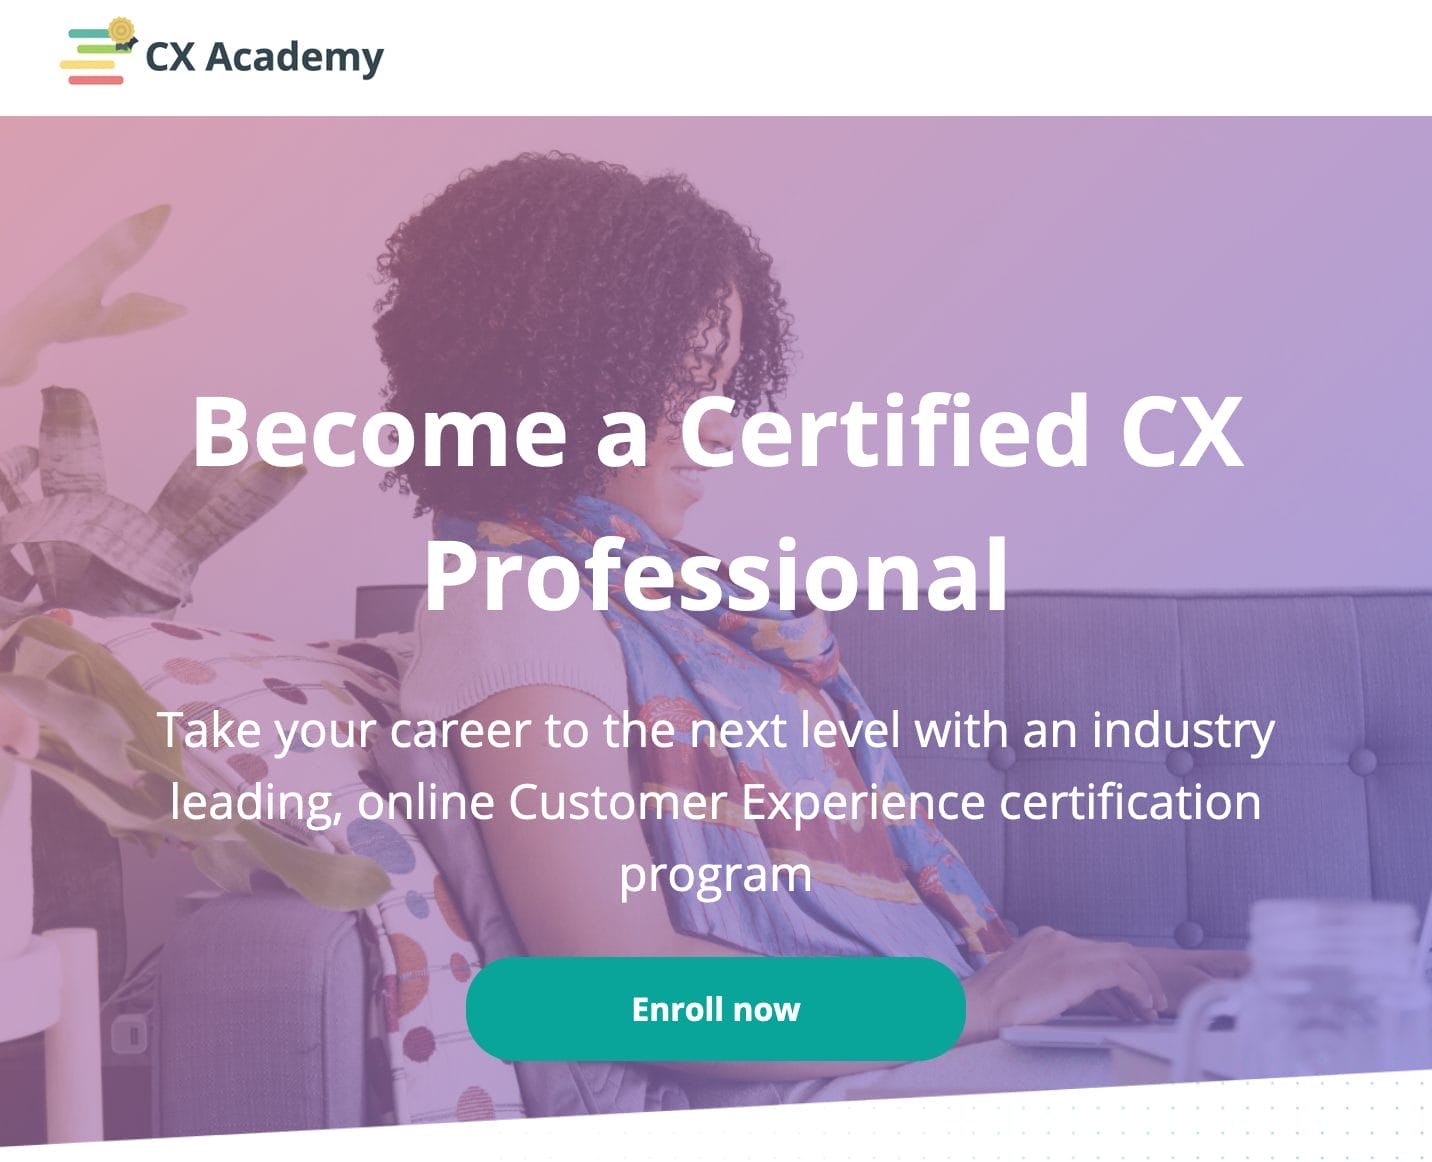 CX Academy – Customer Experience 101